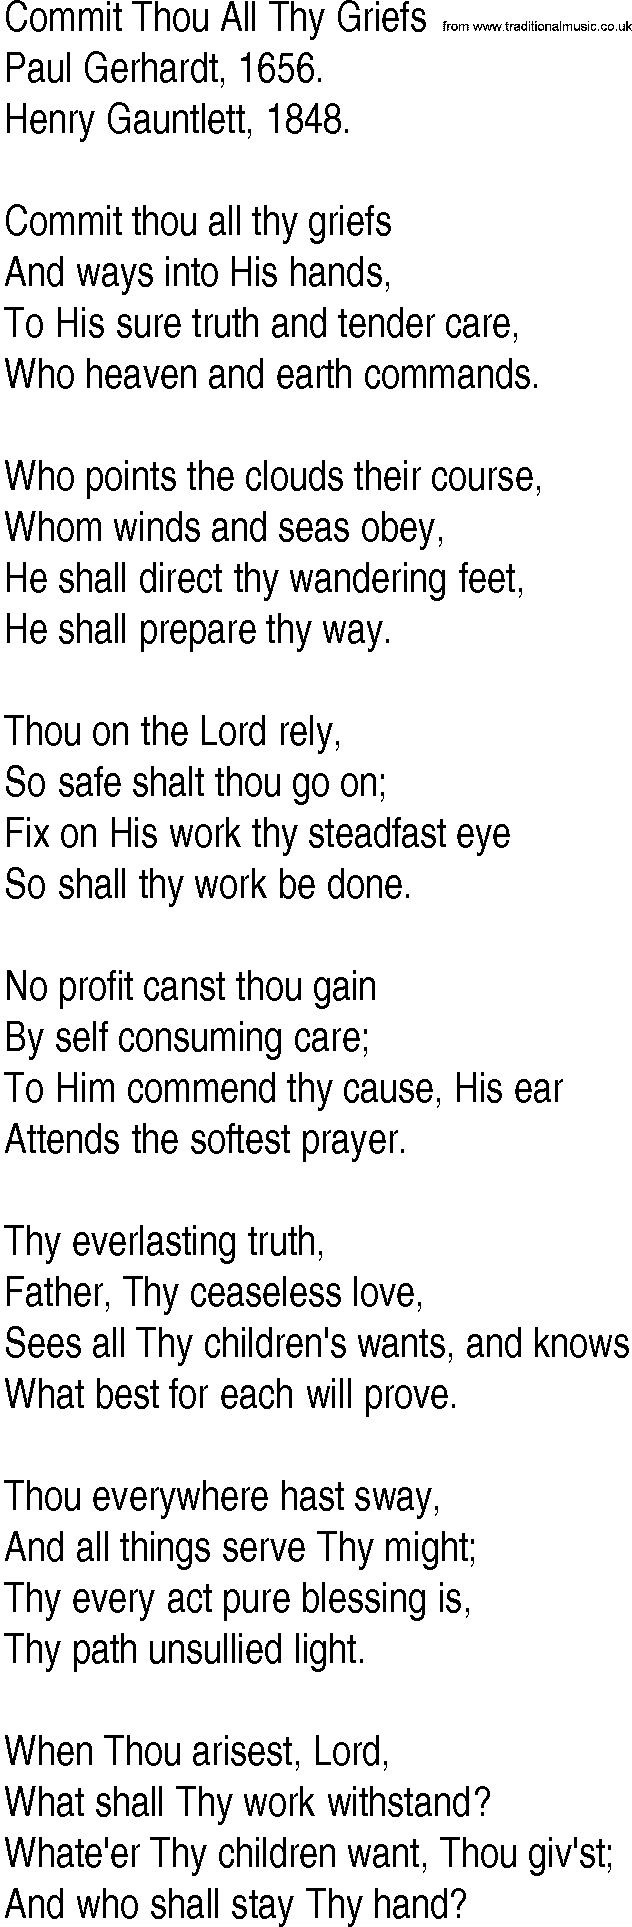 Hymn and Gospel Song: Commit Thou All Thy Griefs by Paul Gerhardt lyrics